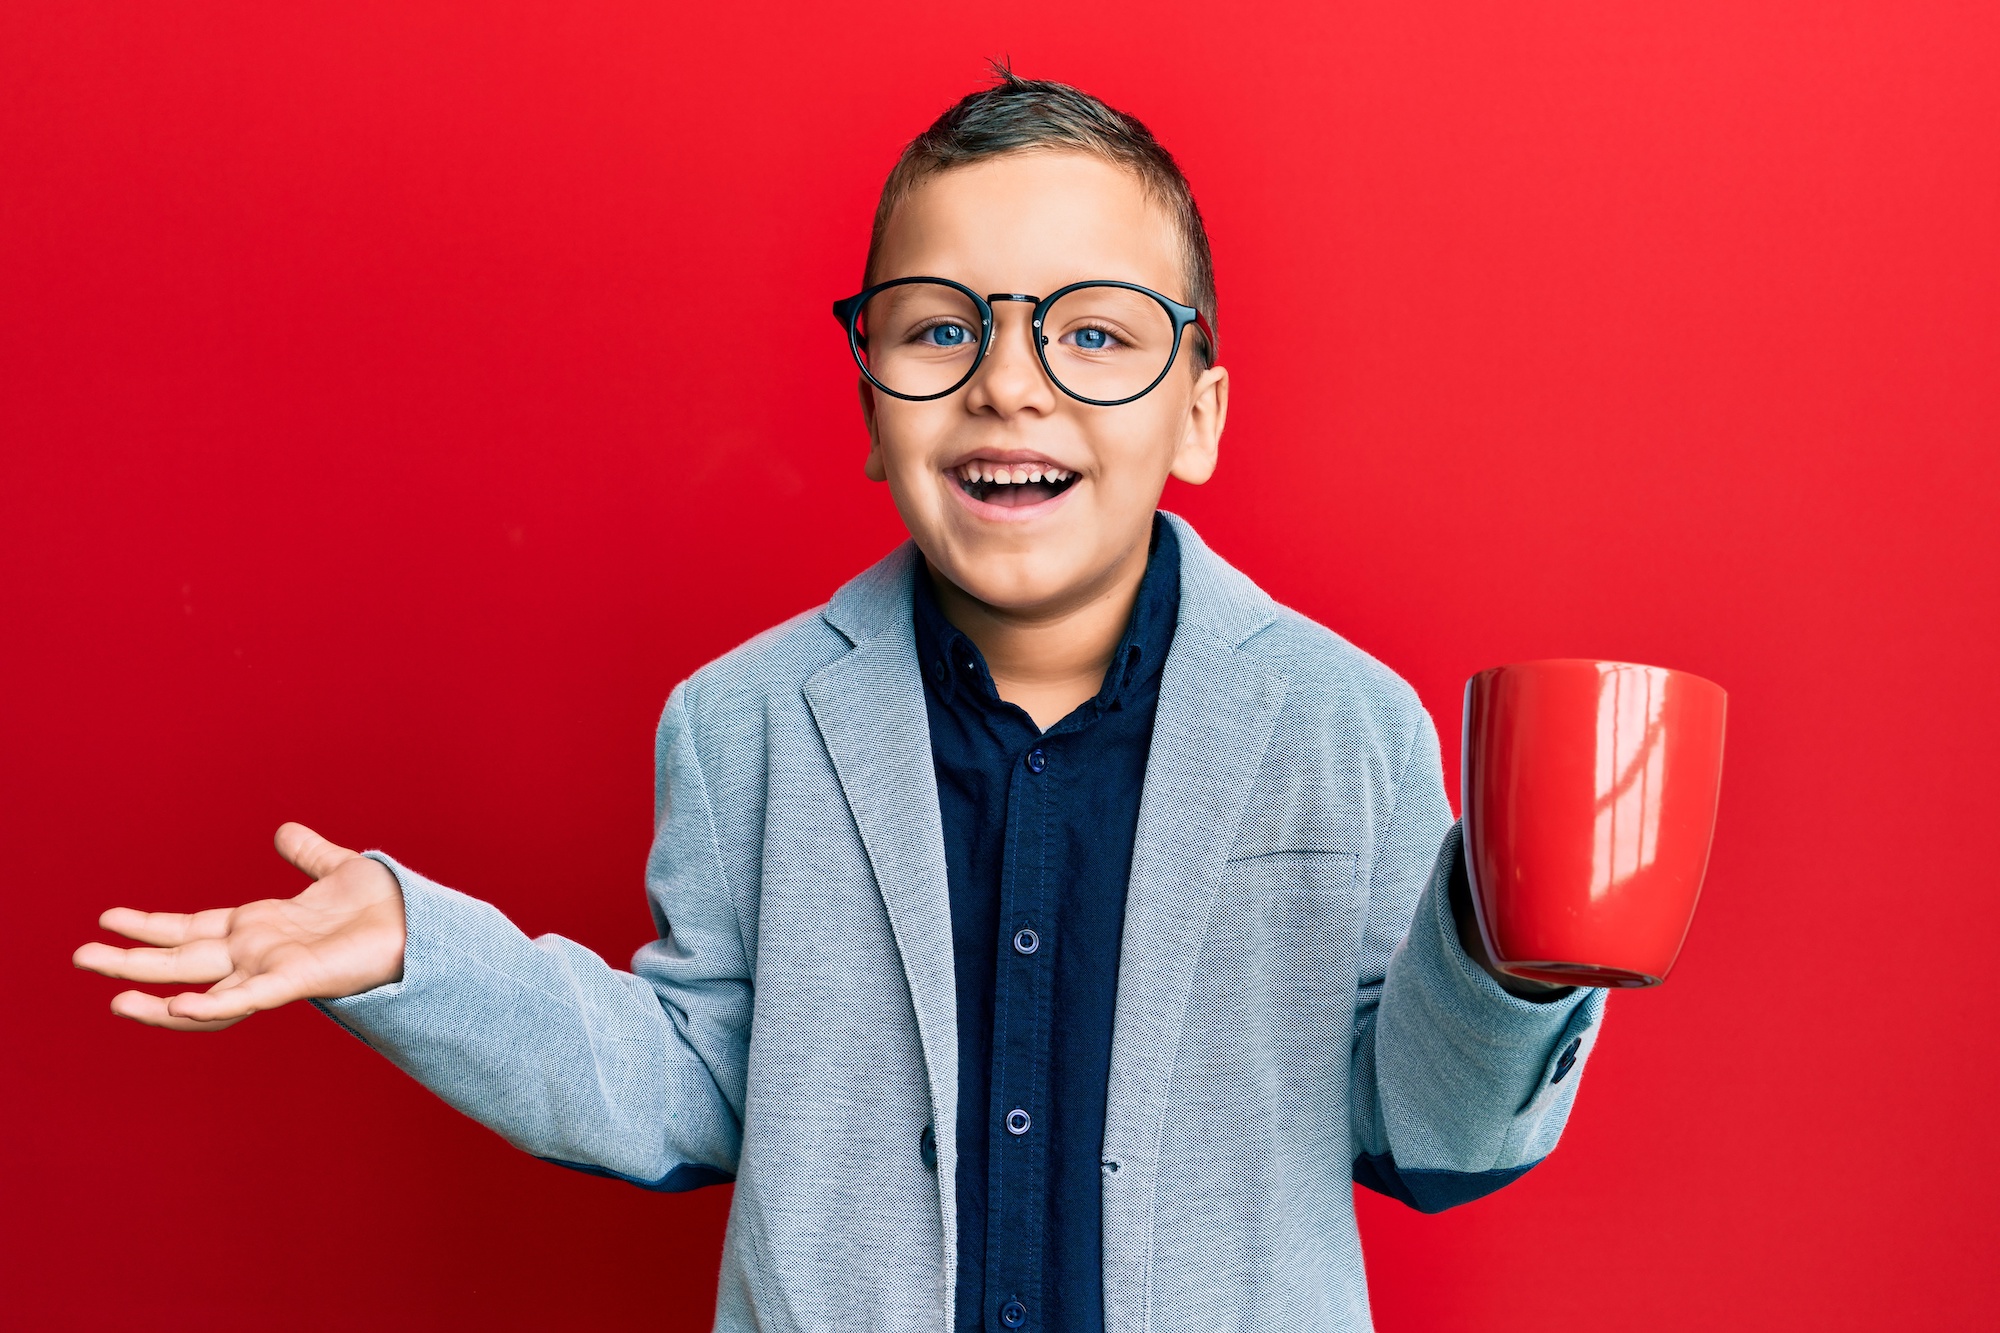 Can Kids Drink Decaf Coffee?